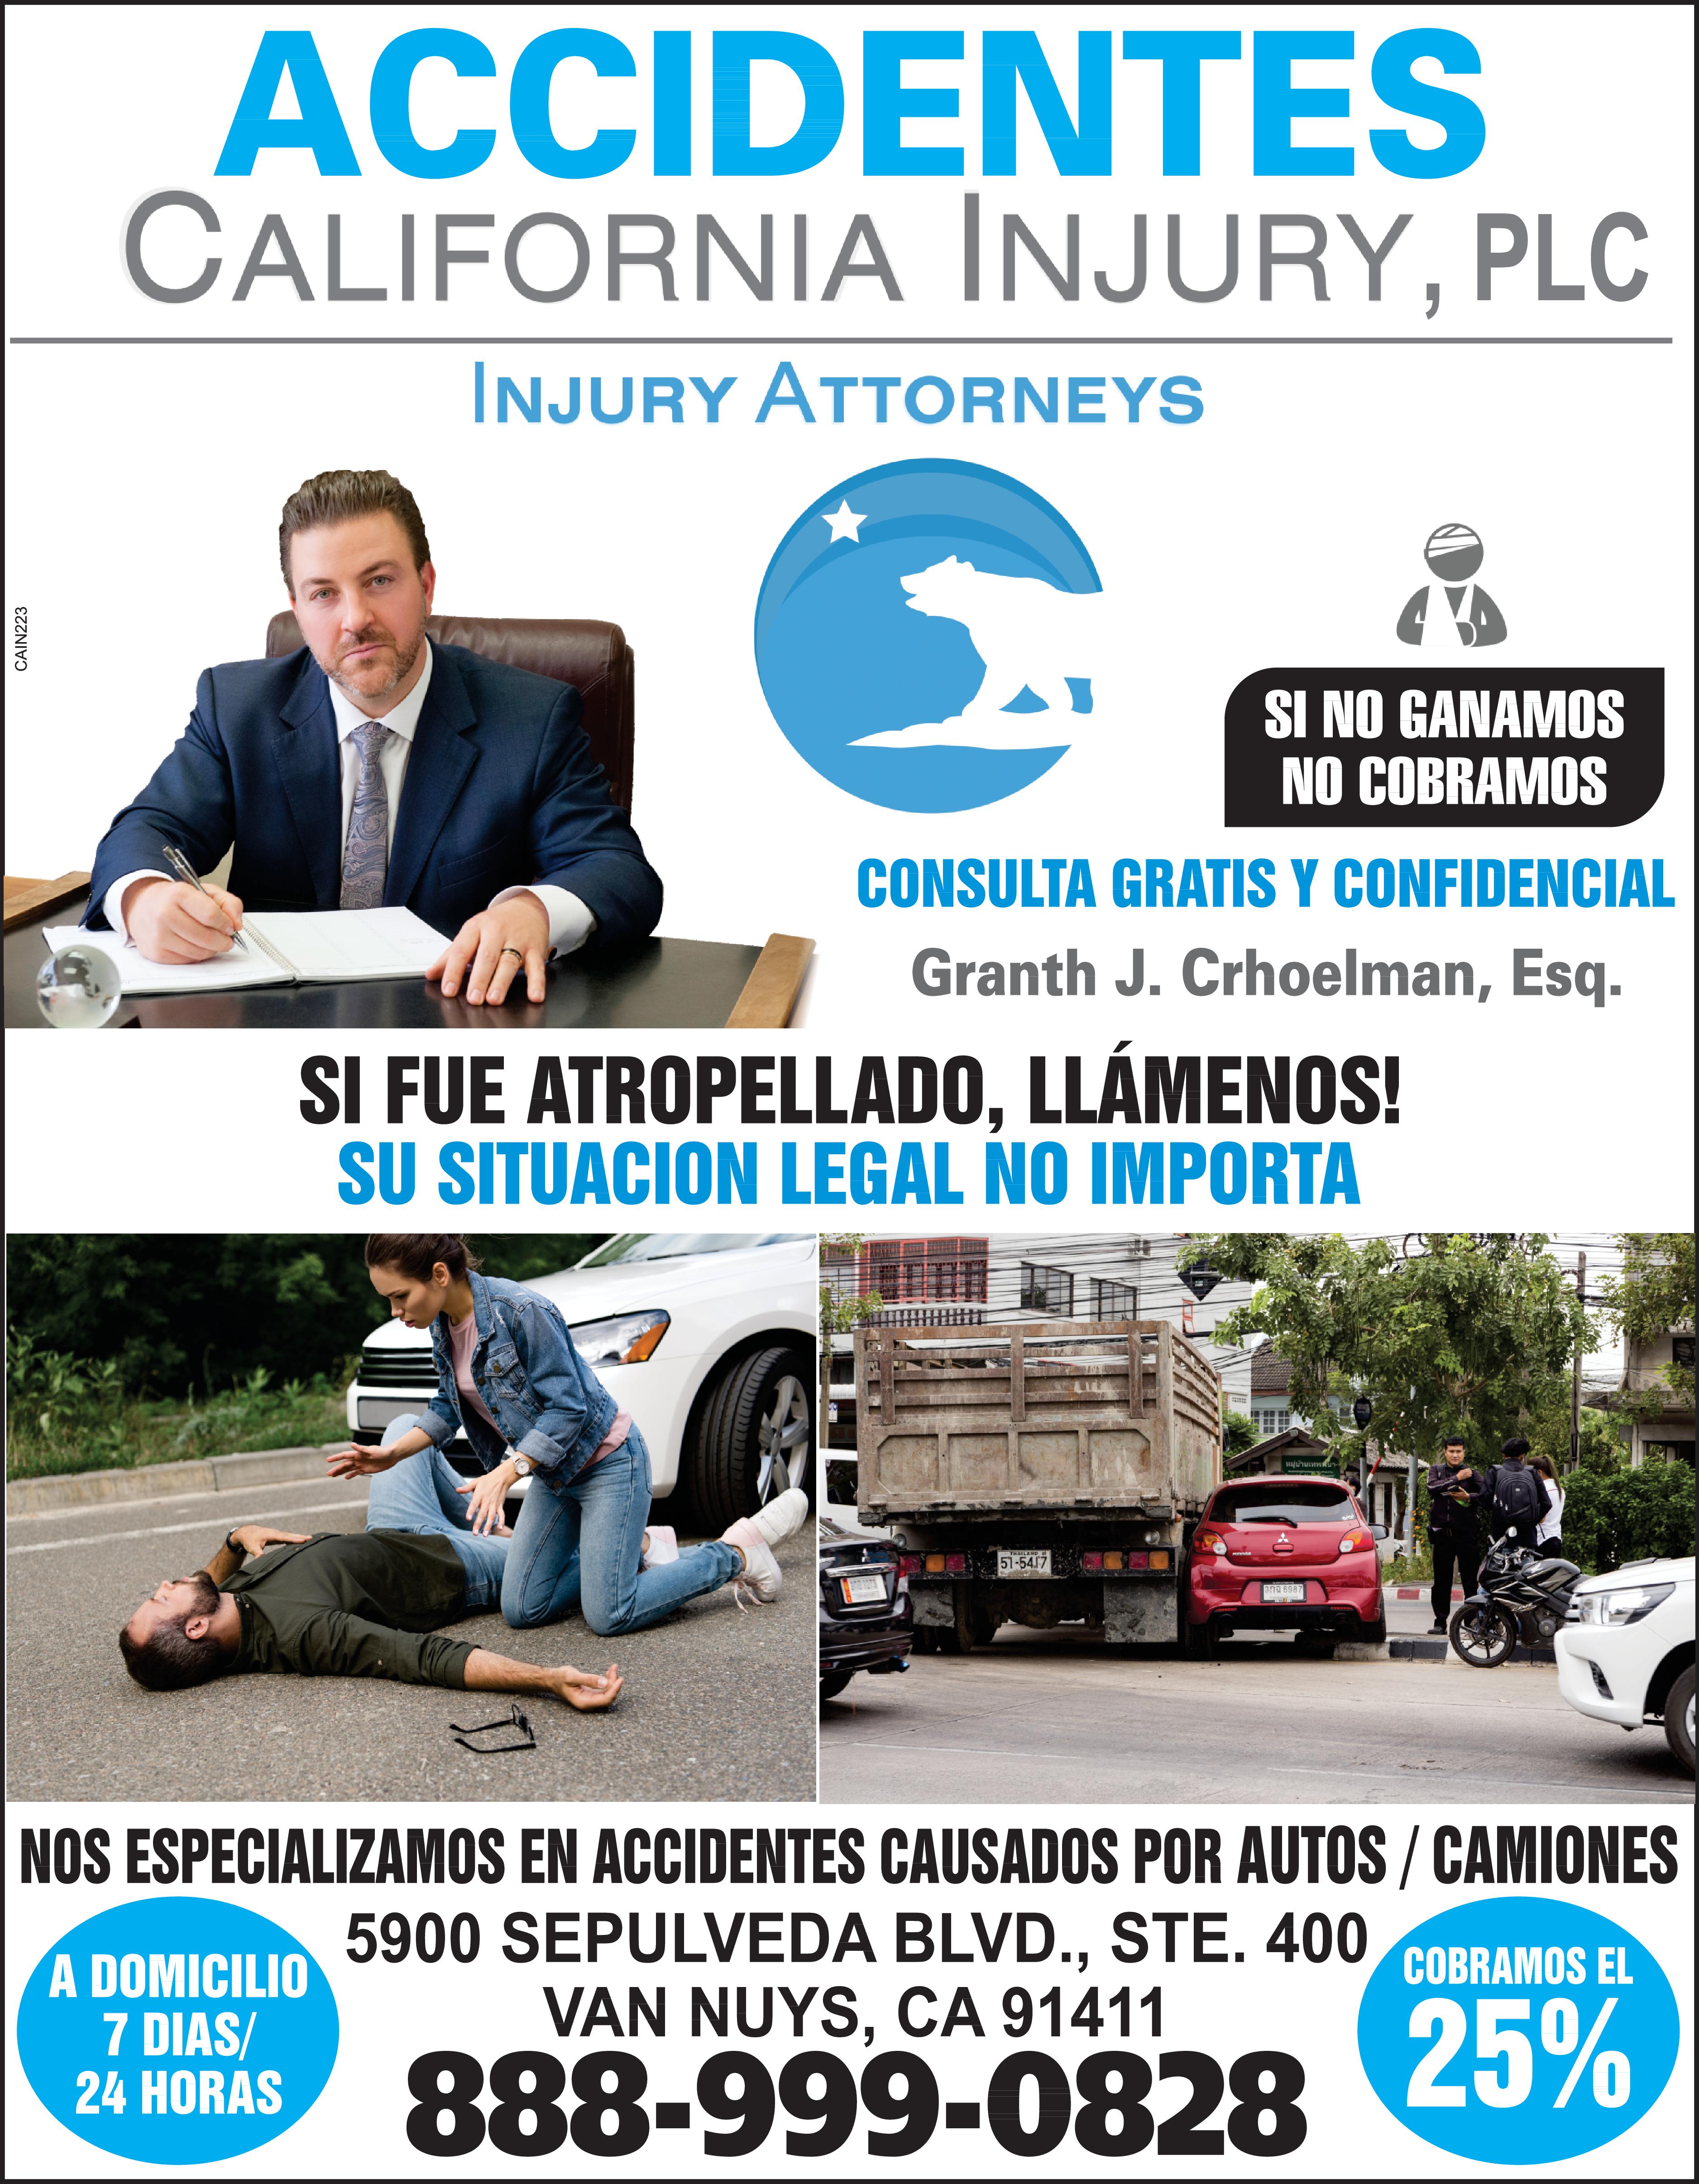 California Injury, Plc